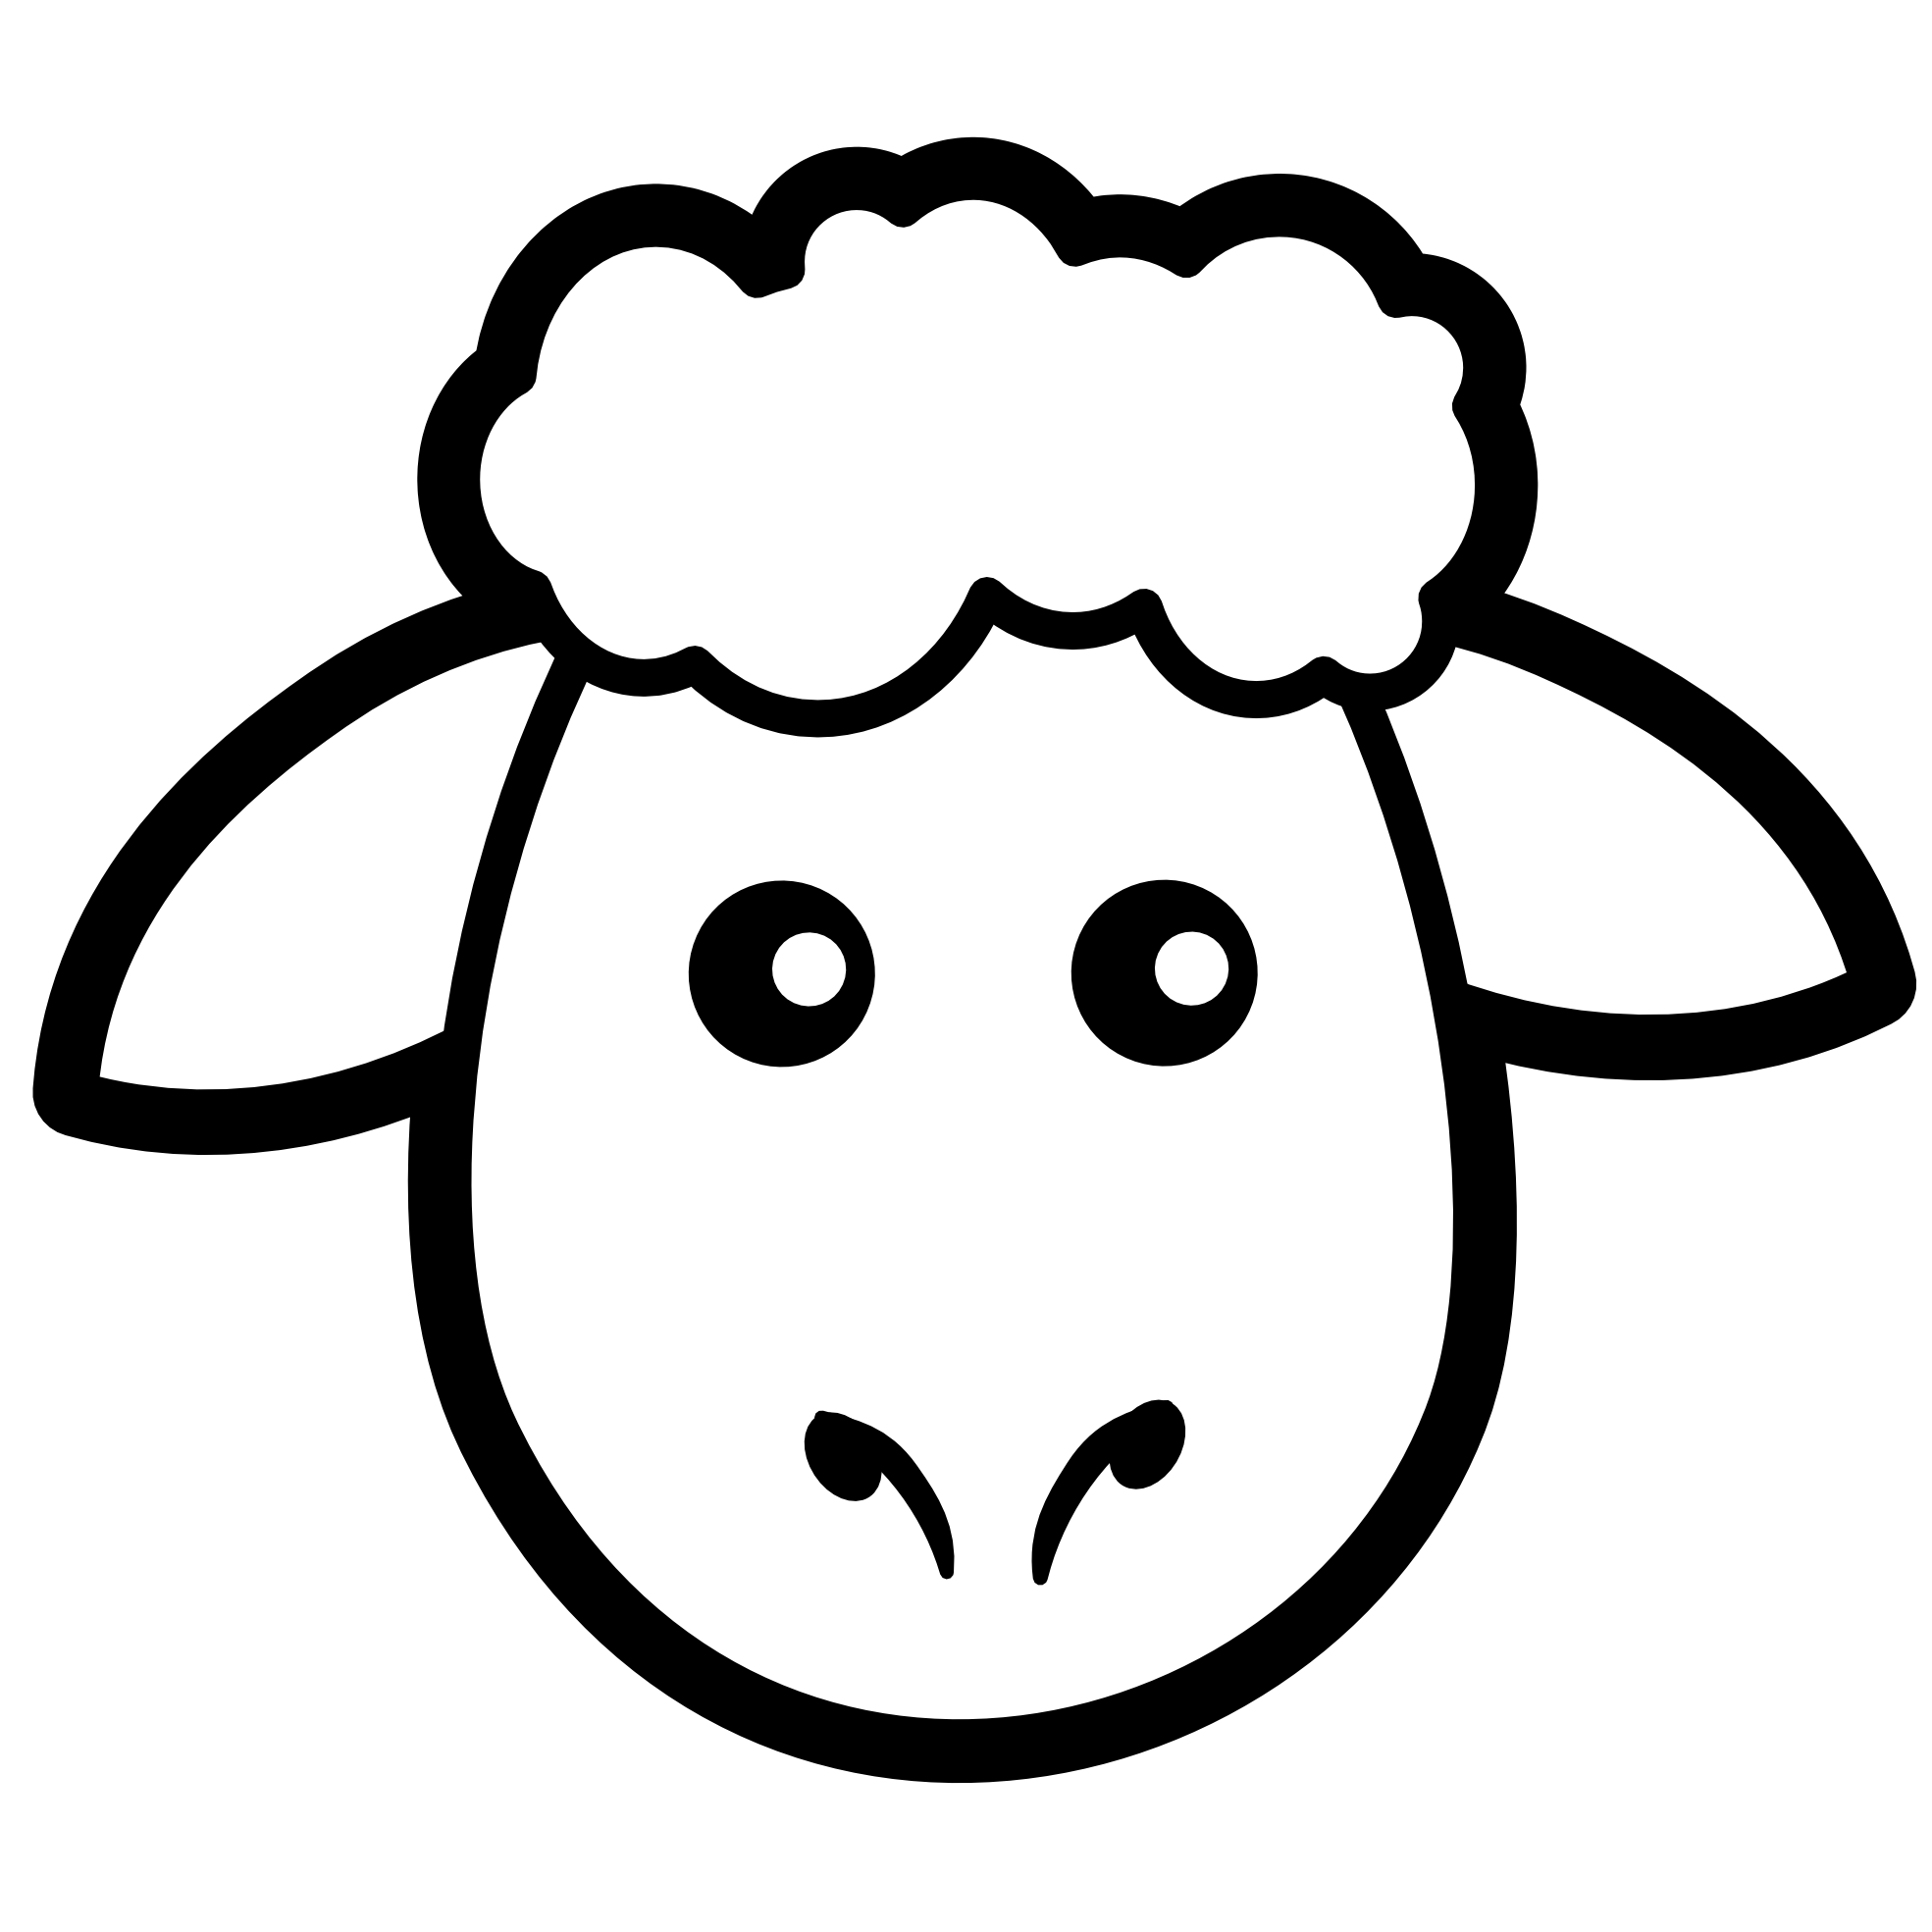 Free Sheep Drawing, Download Free Sheep Drawing png images, Free